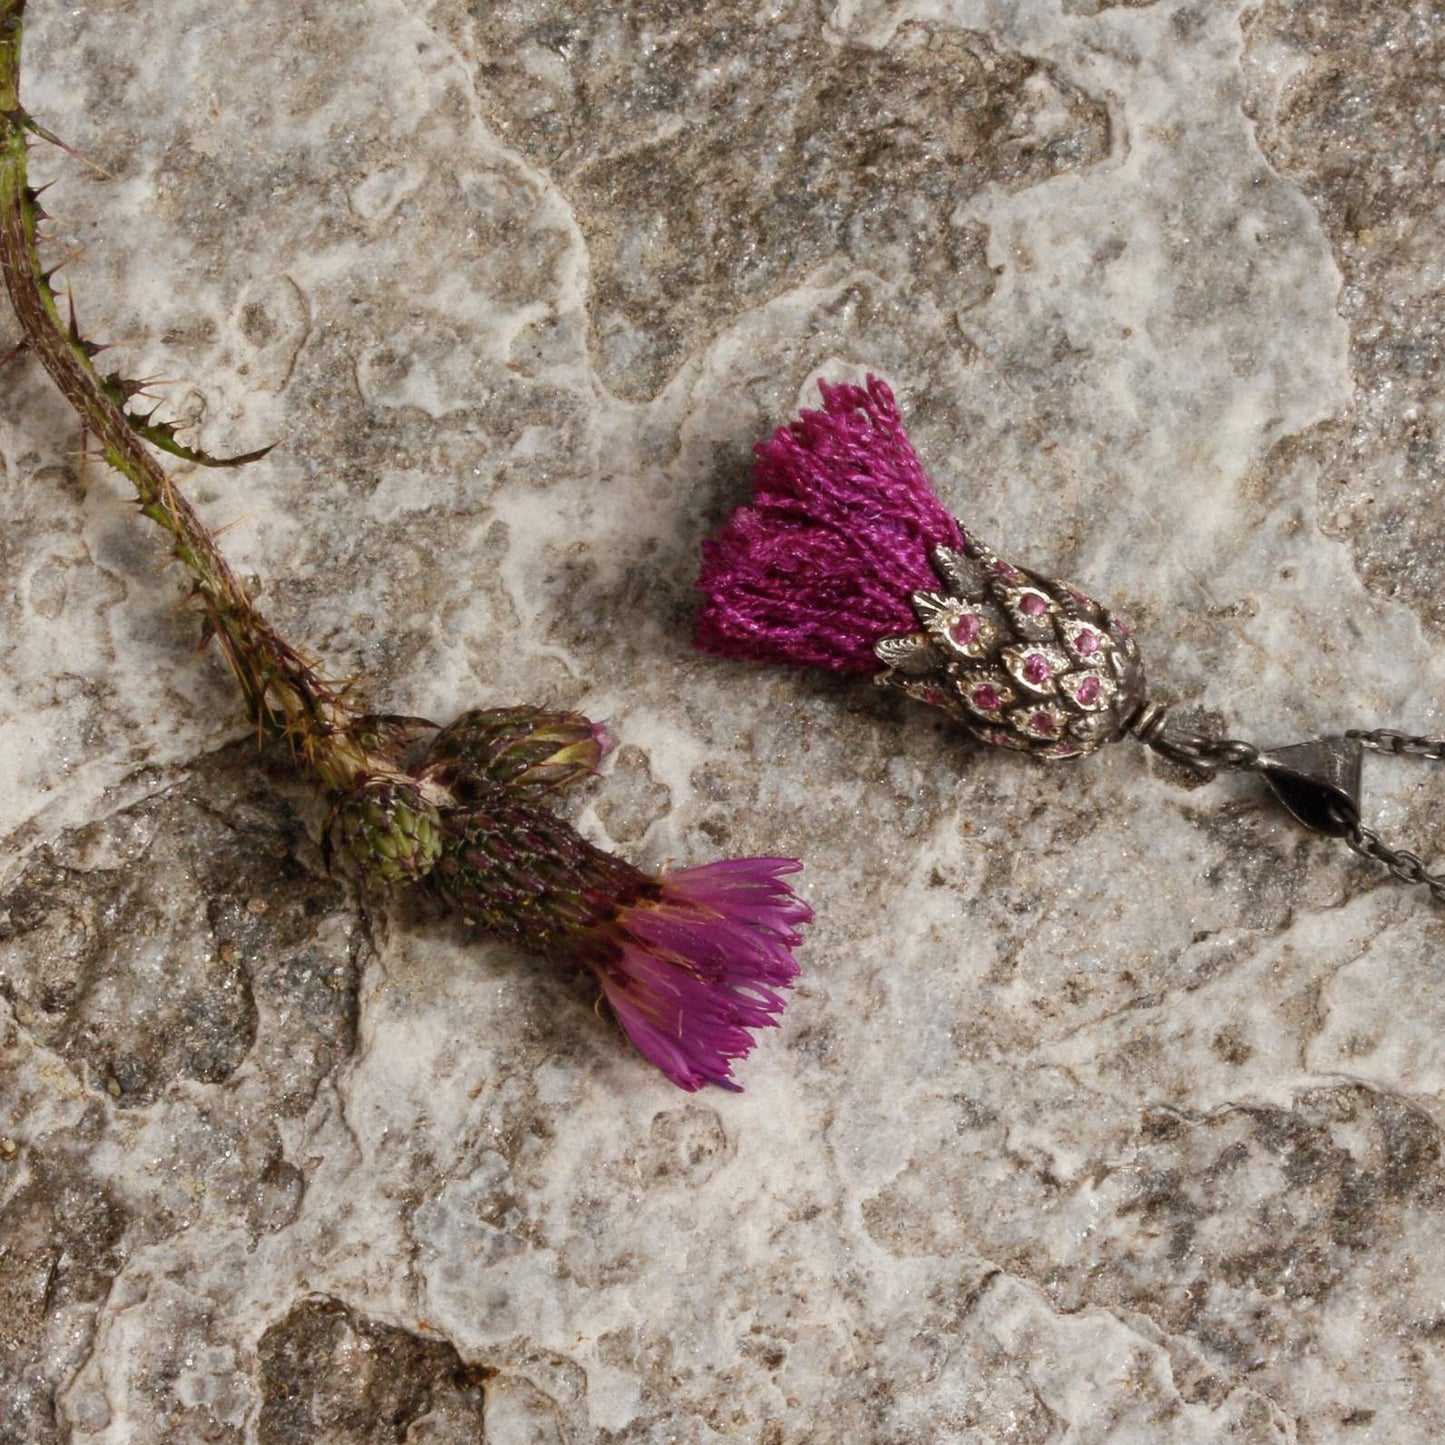 Purple thistle pendant with rhodolite garnets